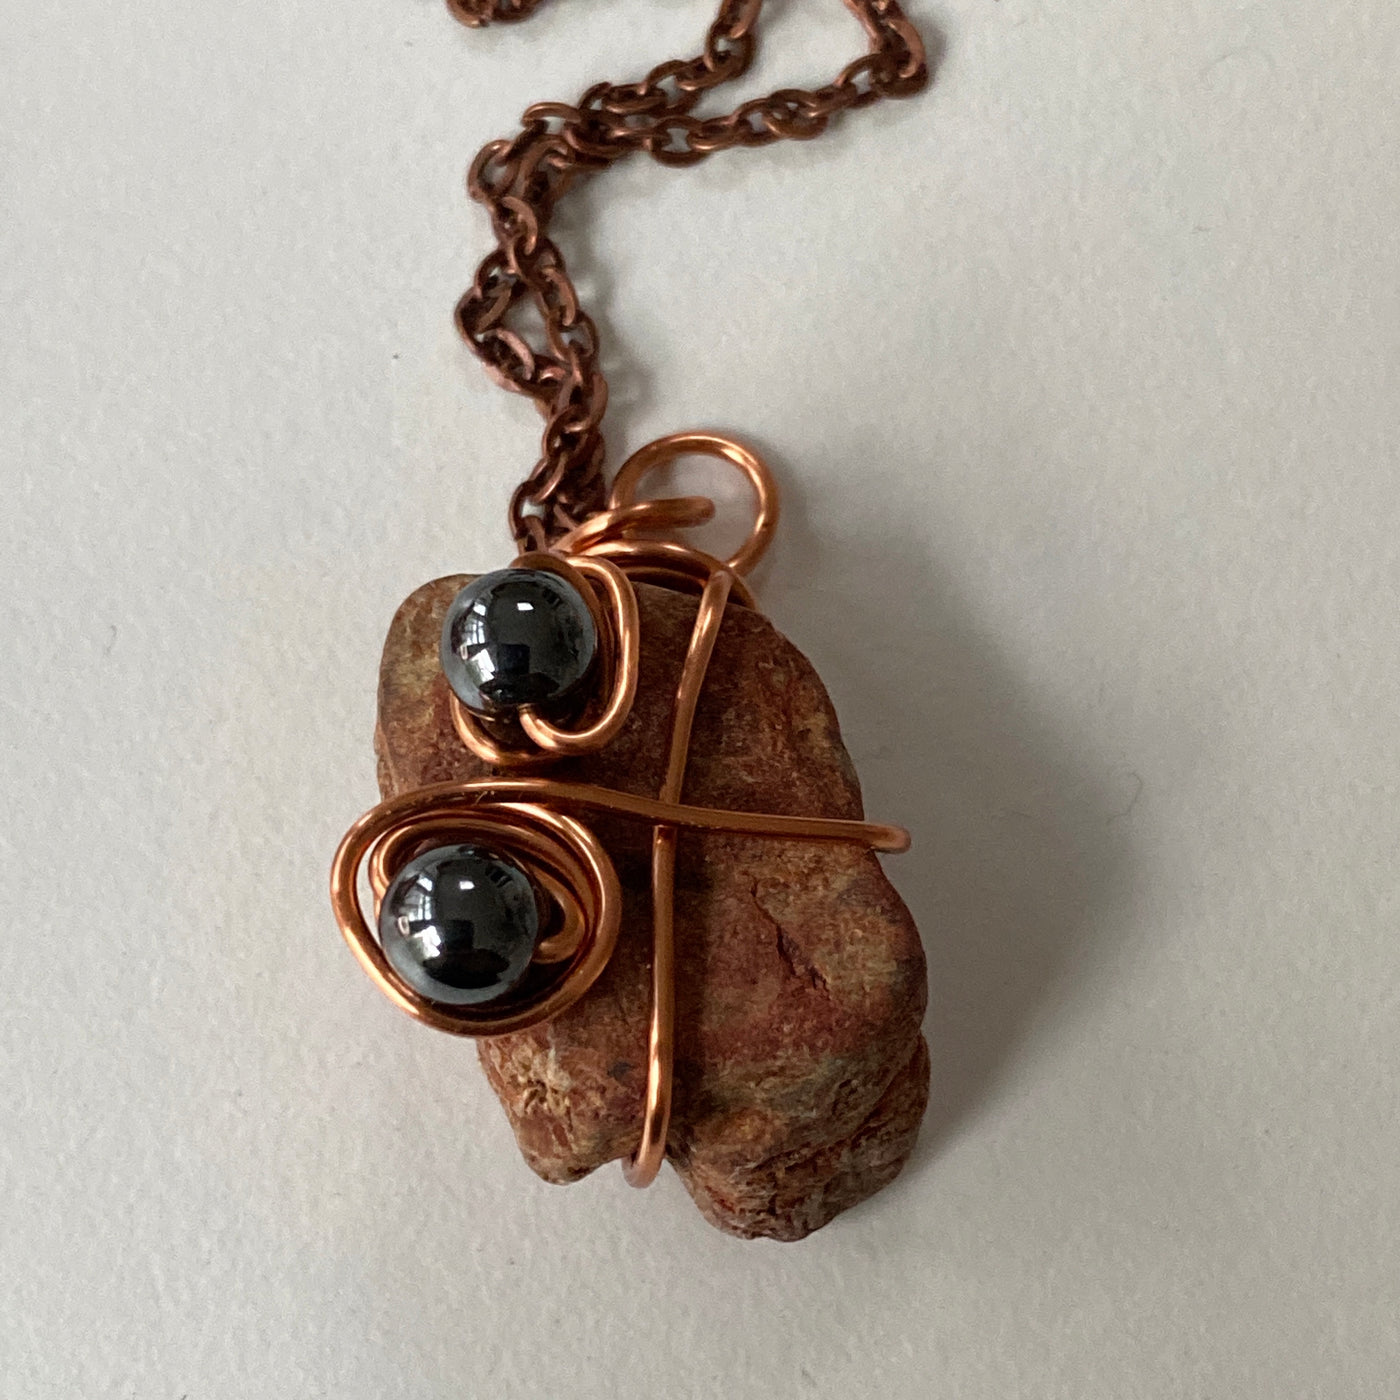 Medium pendant. Red natural stone, black stones and wire. Elbastones collection